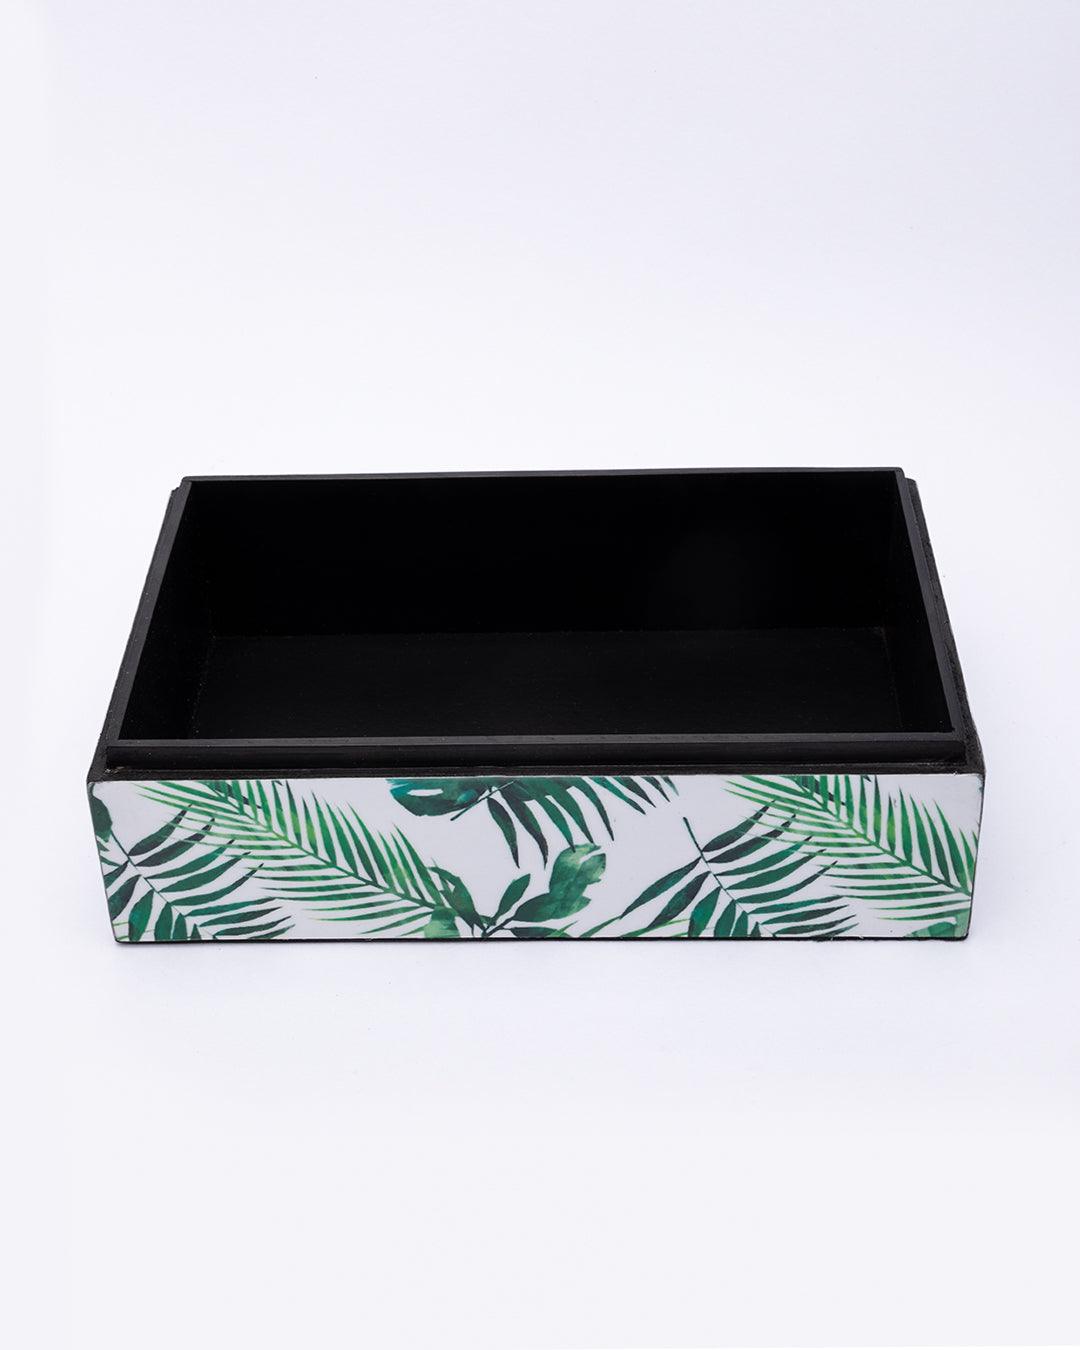 Market99 Tissue Box, Nature Inspired Design, Facial Tissue Holder with Soft Bottom for Home, Office, & Restaurant, Rectangular, Green Colour, MDF - MARKET 99